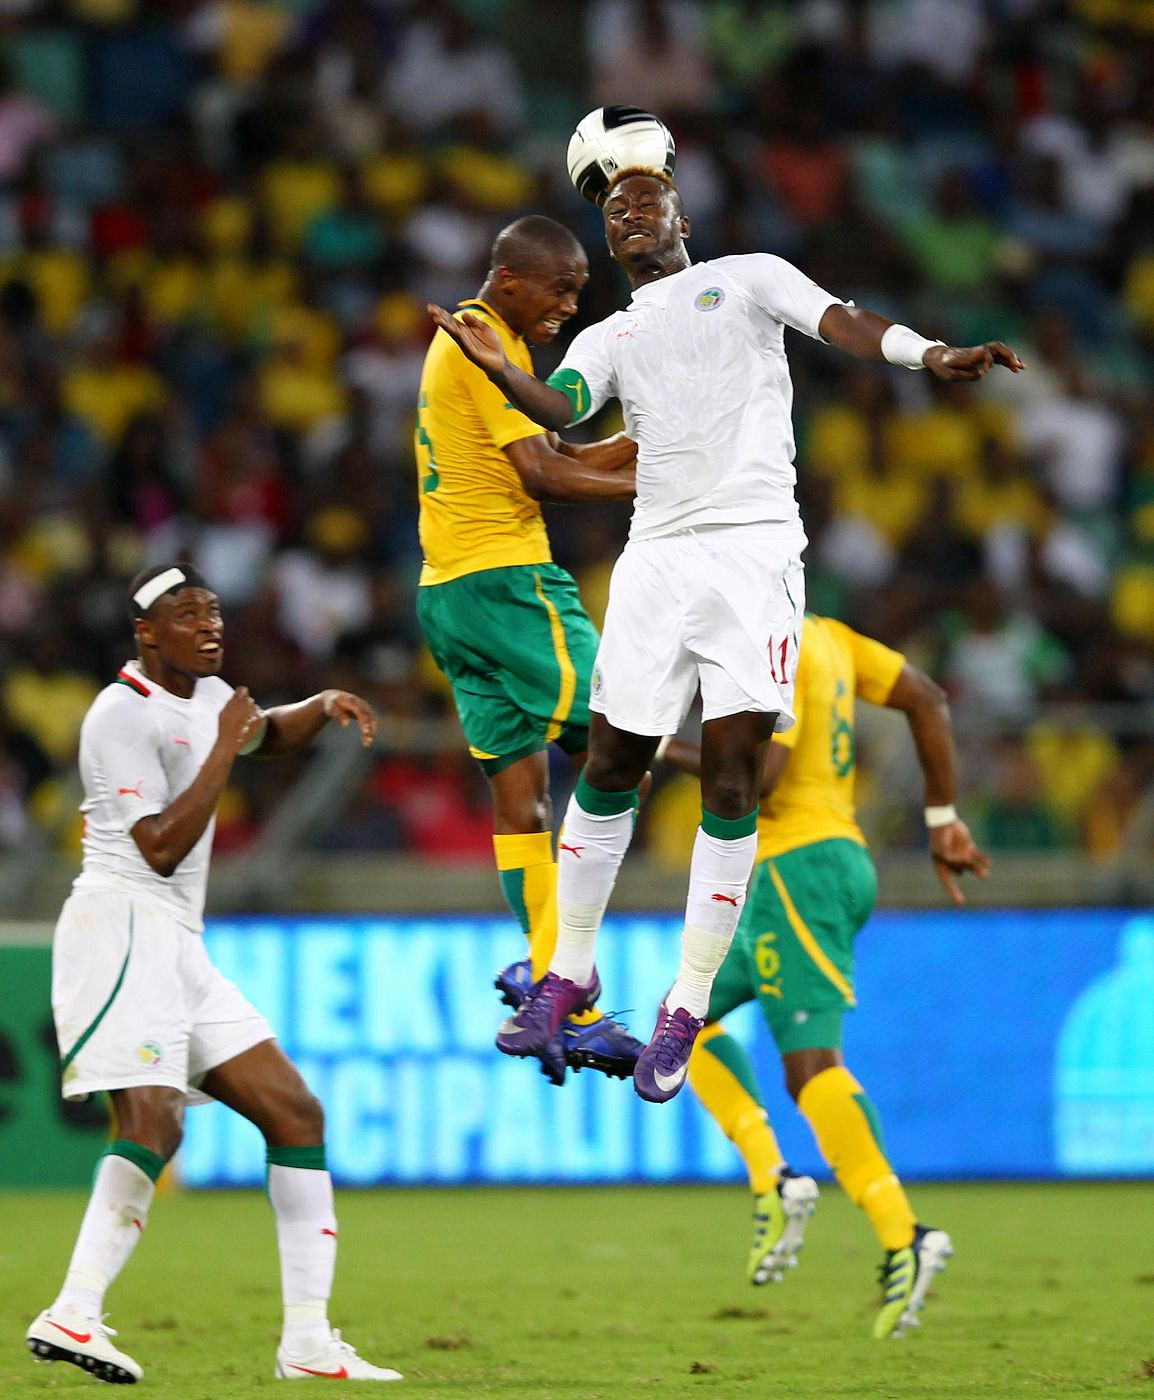 Amistoso Suráfrica - Senegal de fútbol